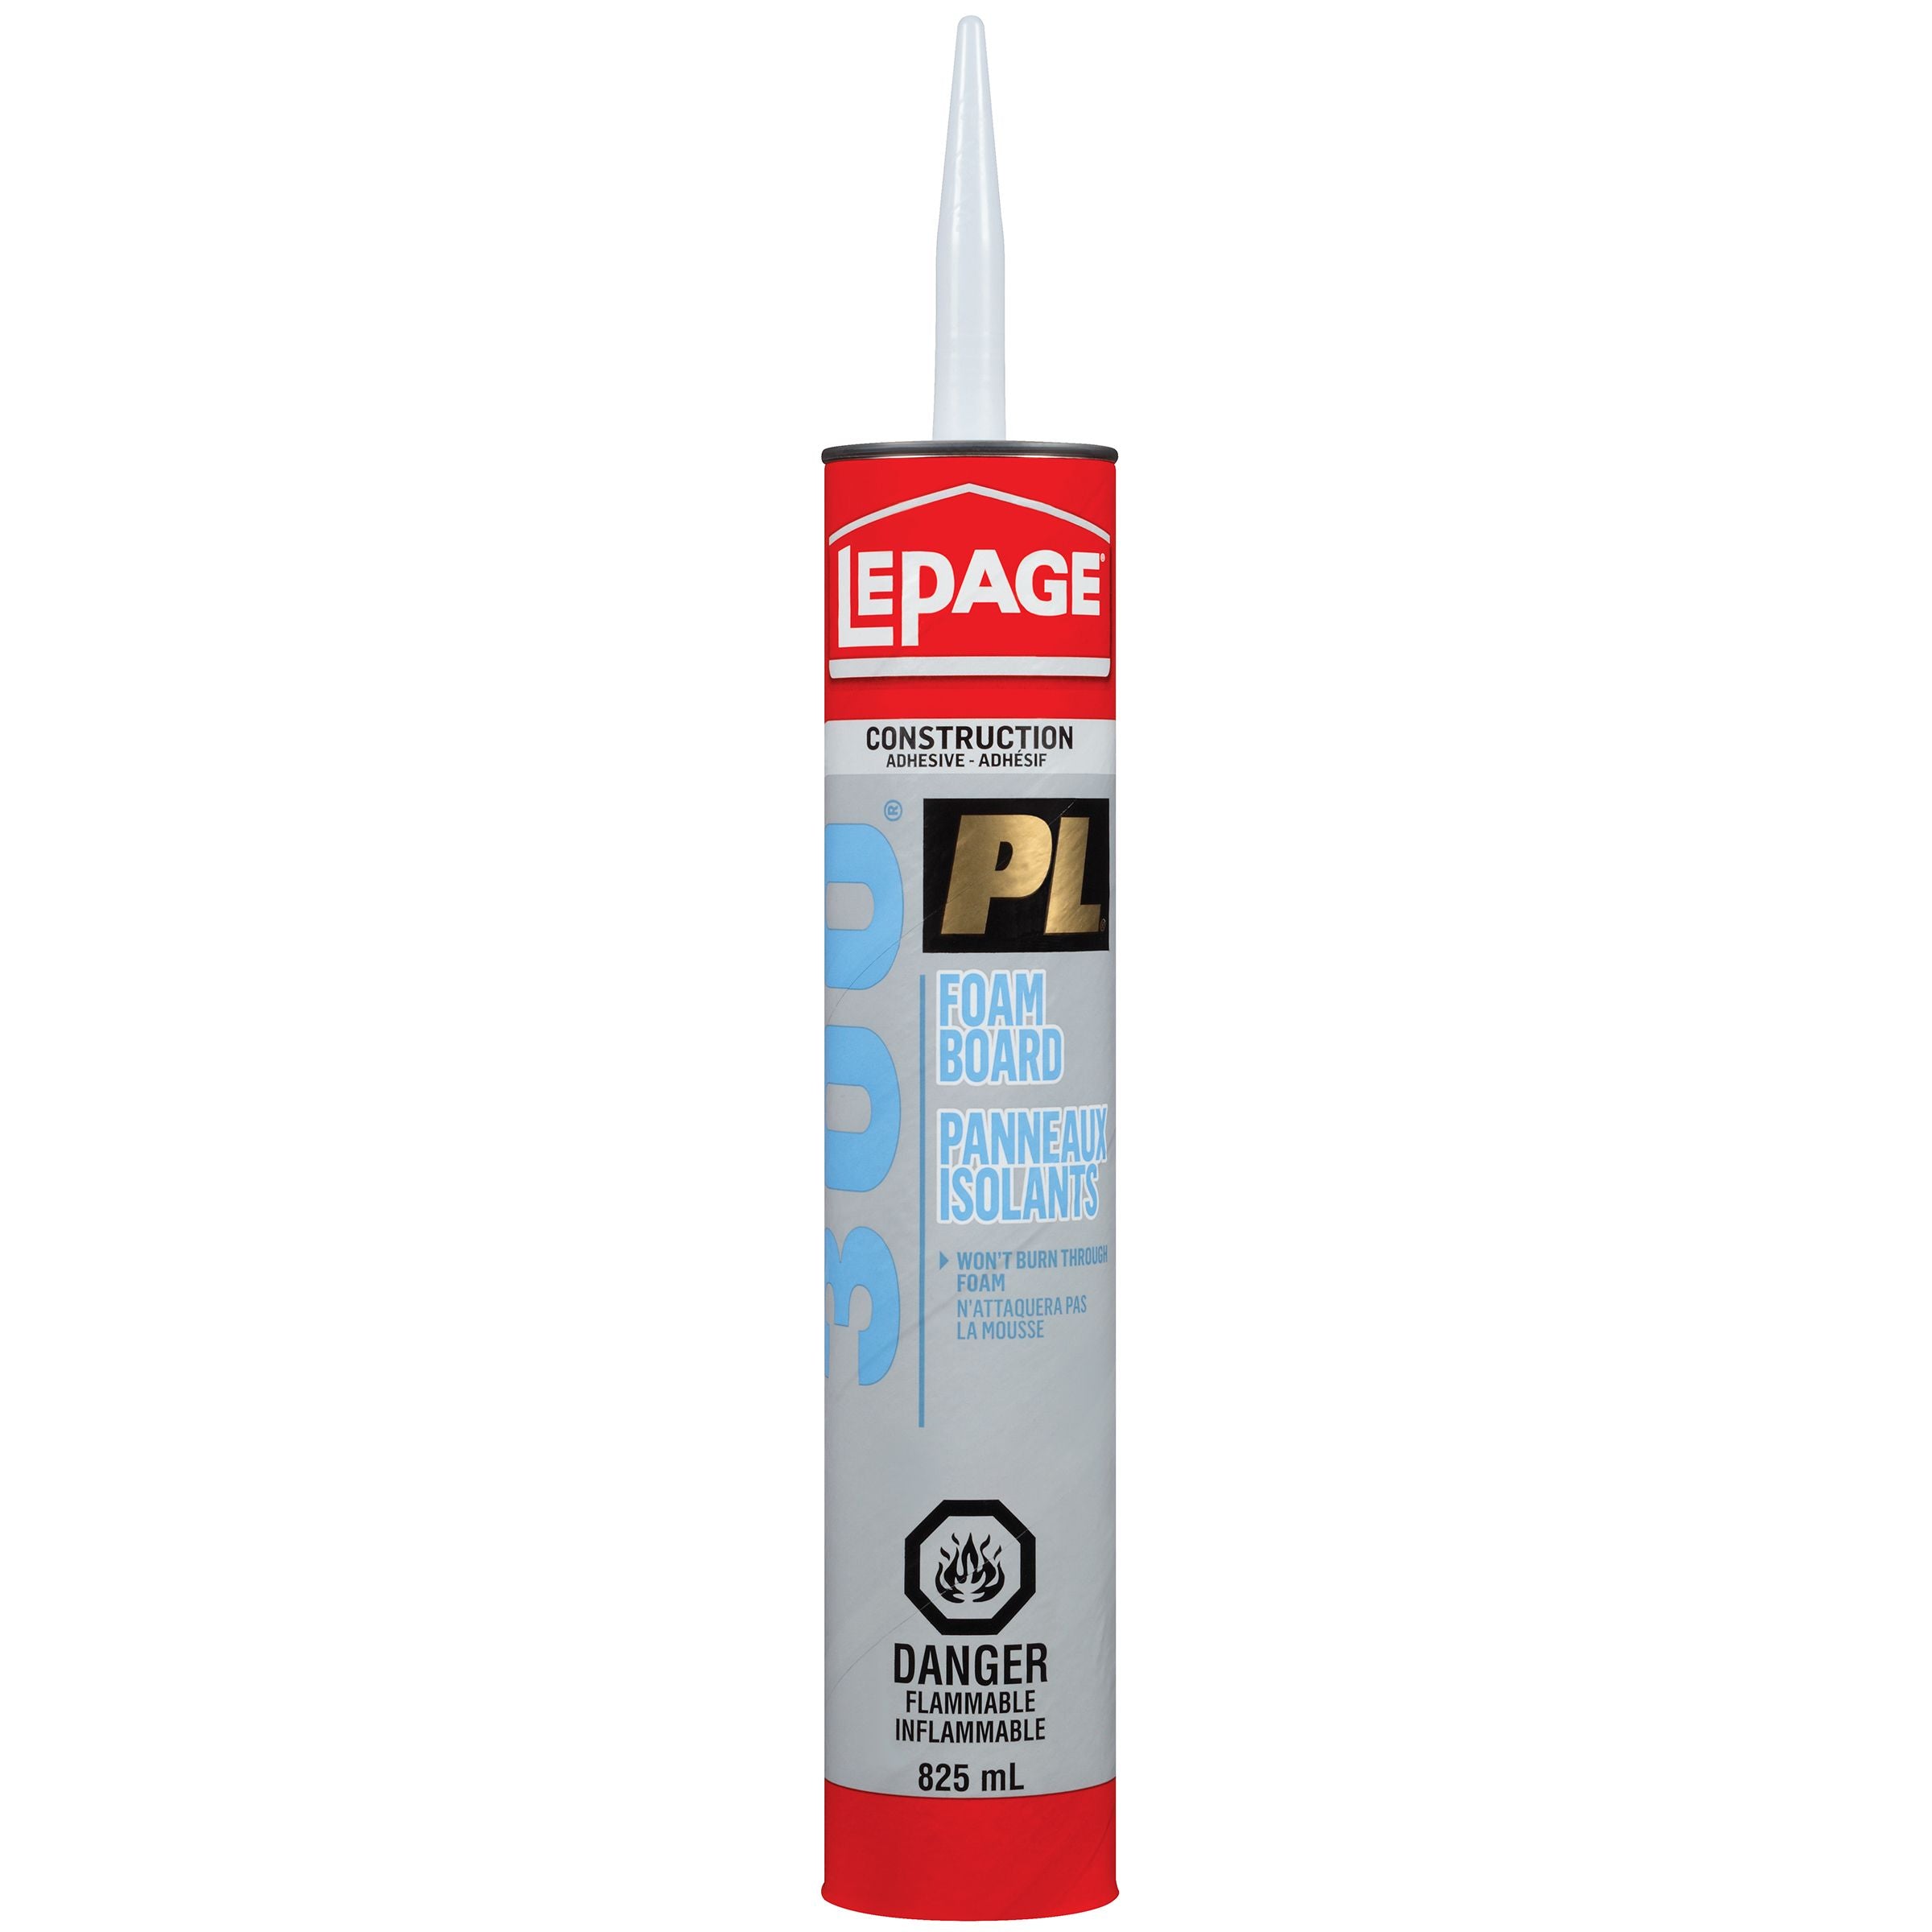 LePage PL 300 Foamboard Adhesive, Tan, 825 ml Cartridge, Pack of 1